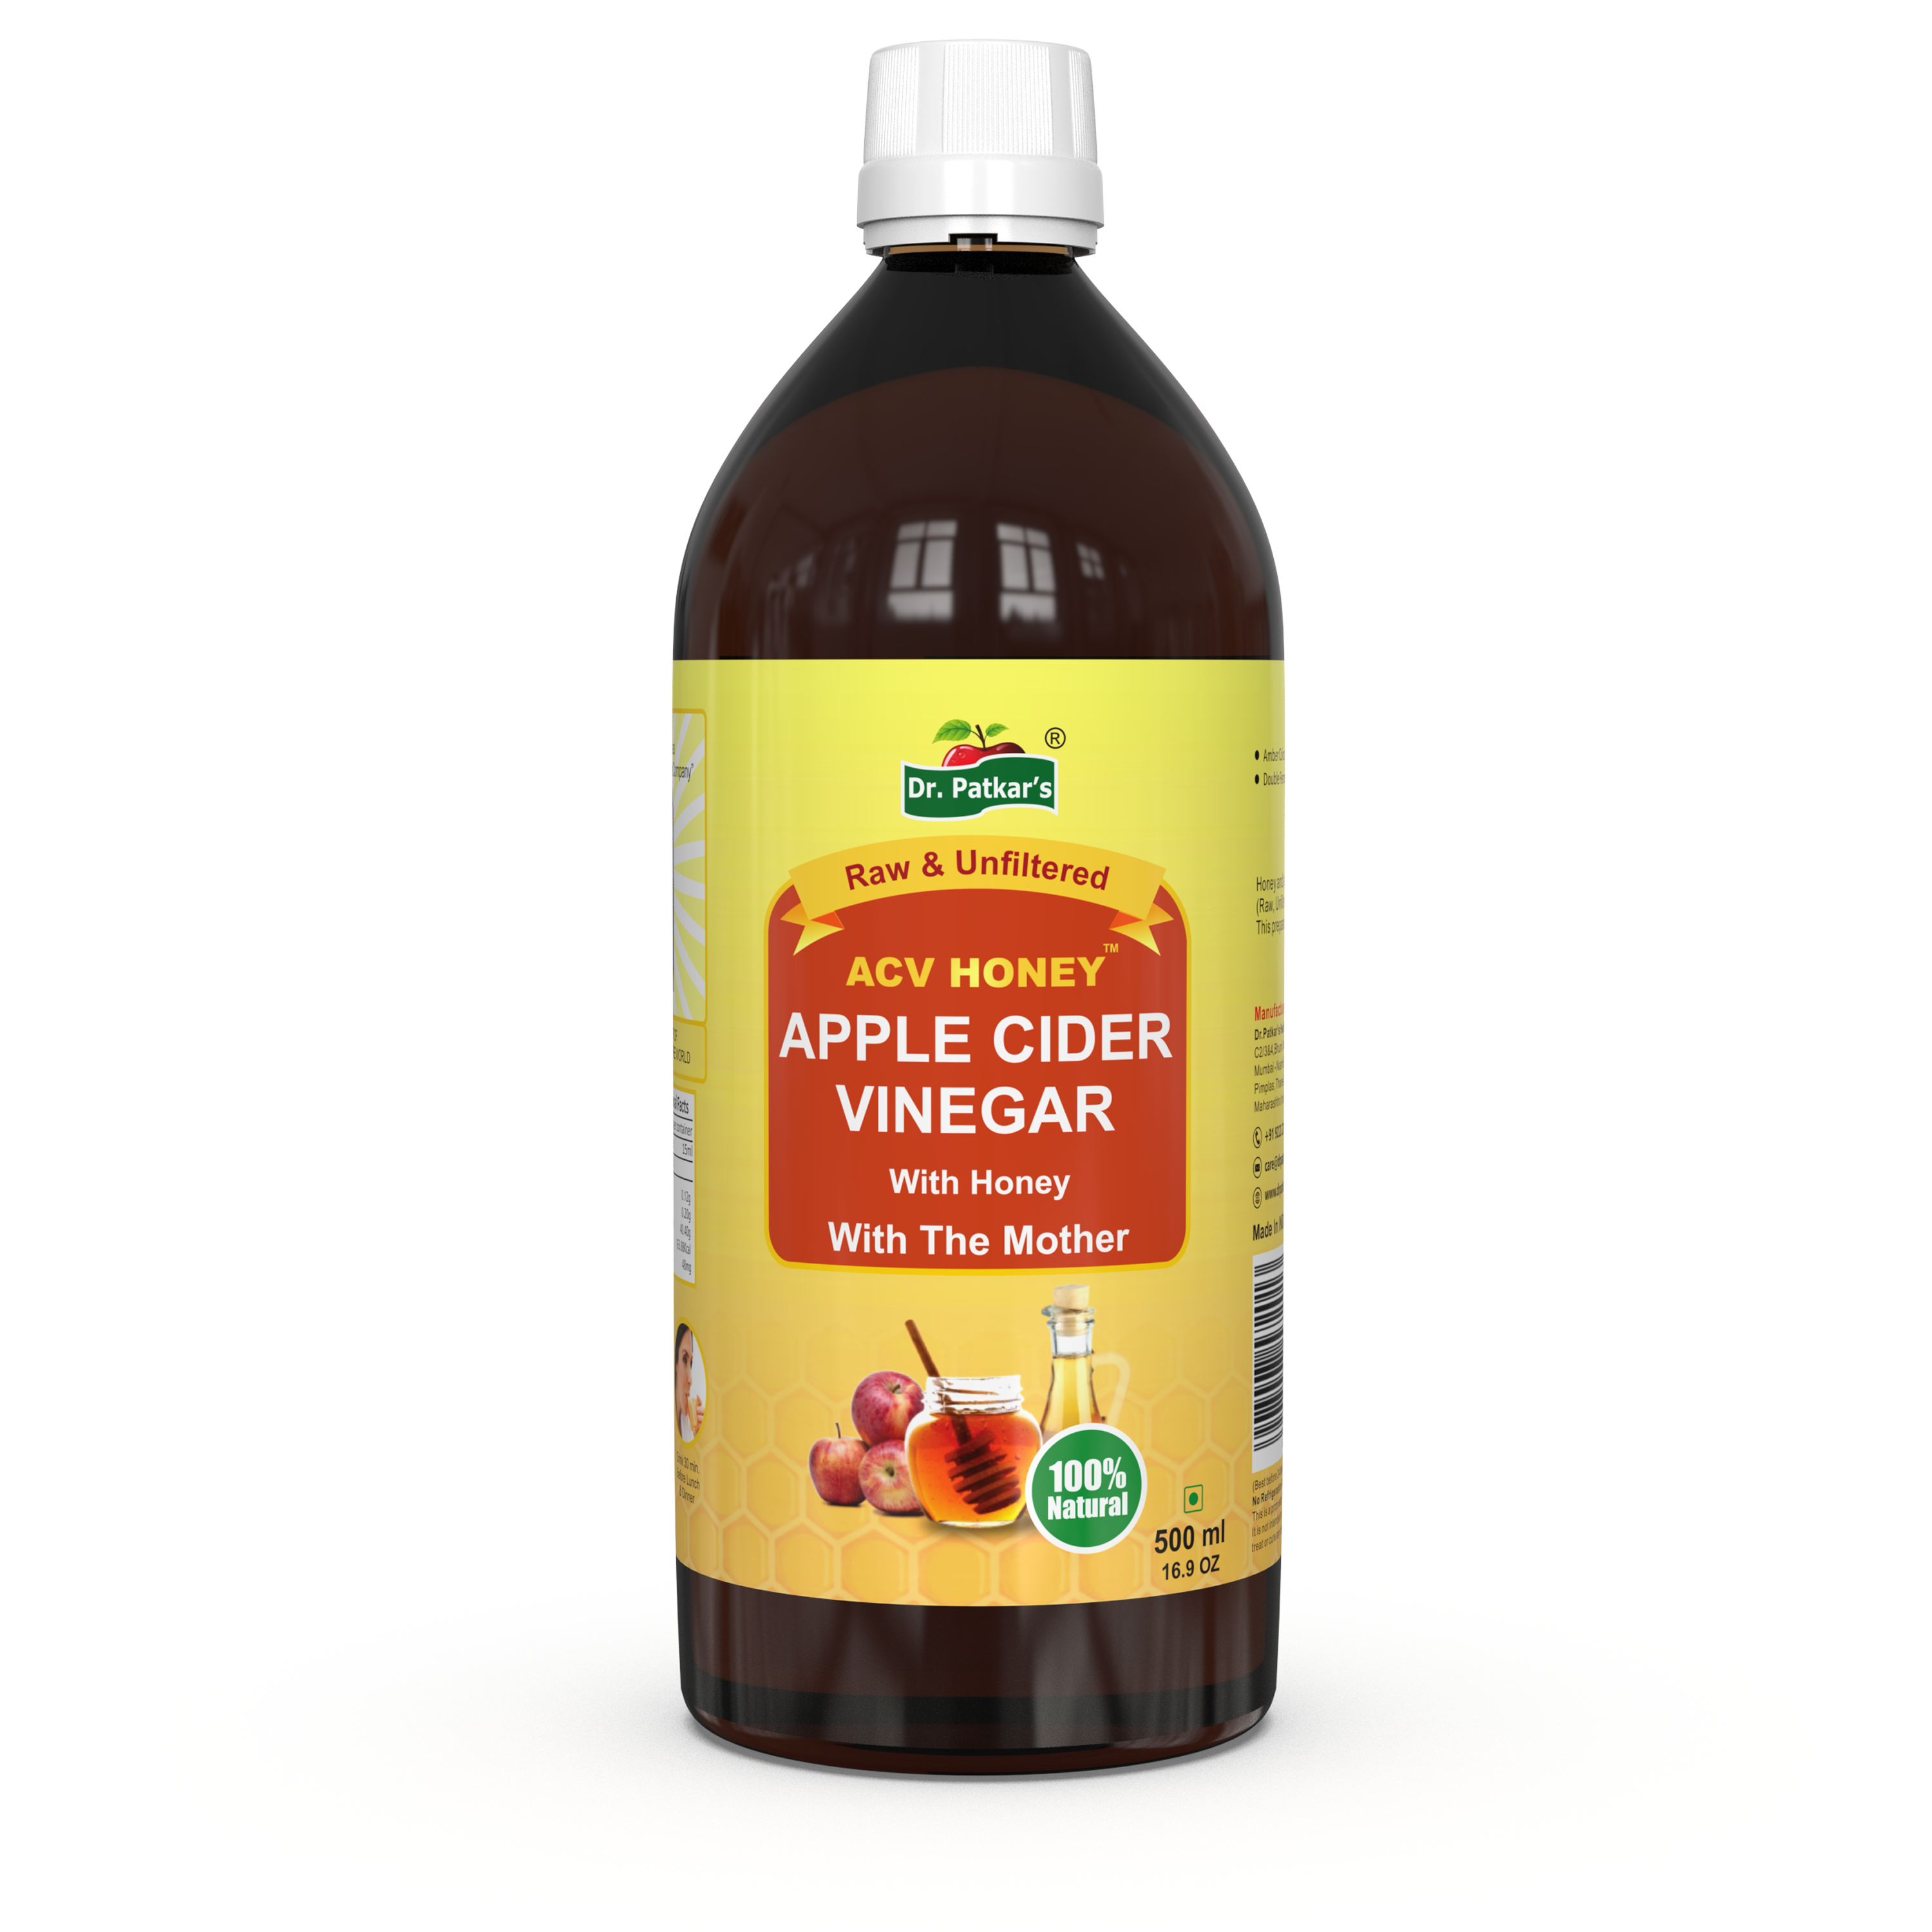 Dr. Patkar's Apple Cider Vinegar with Honey 